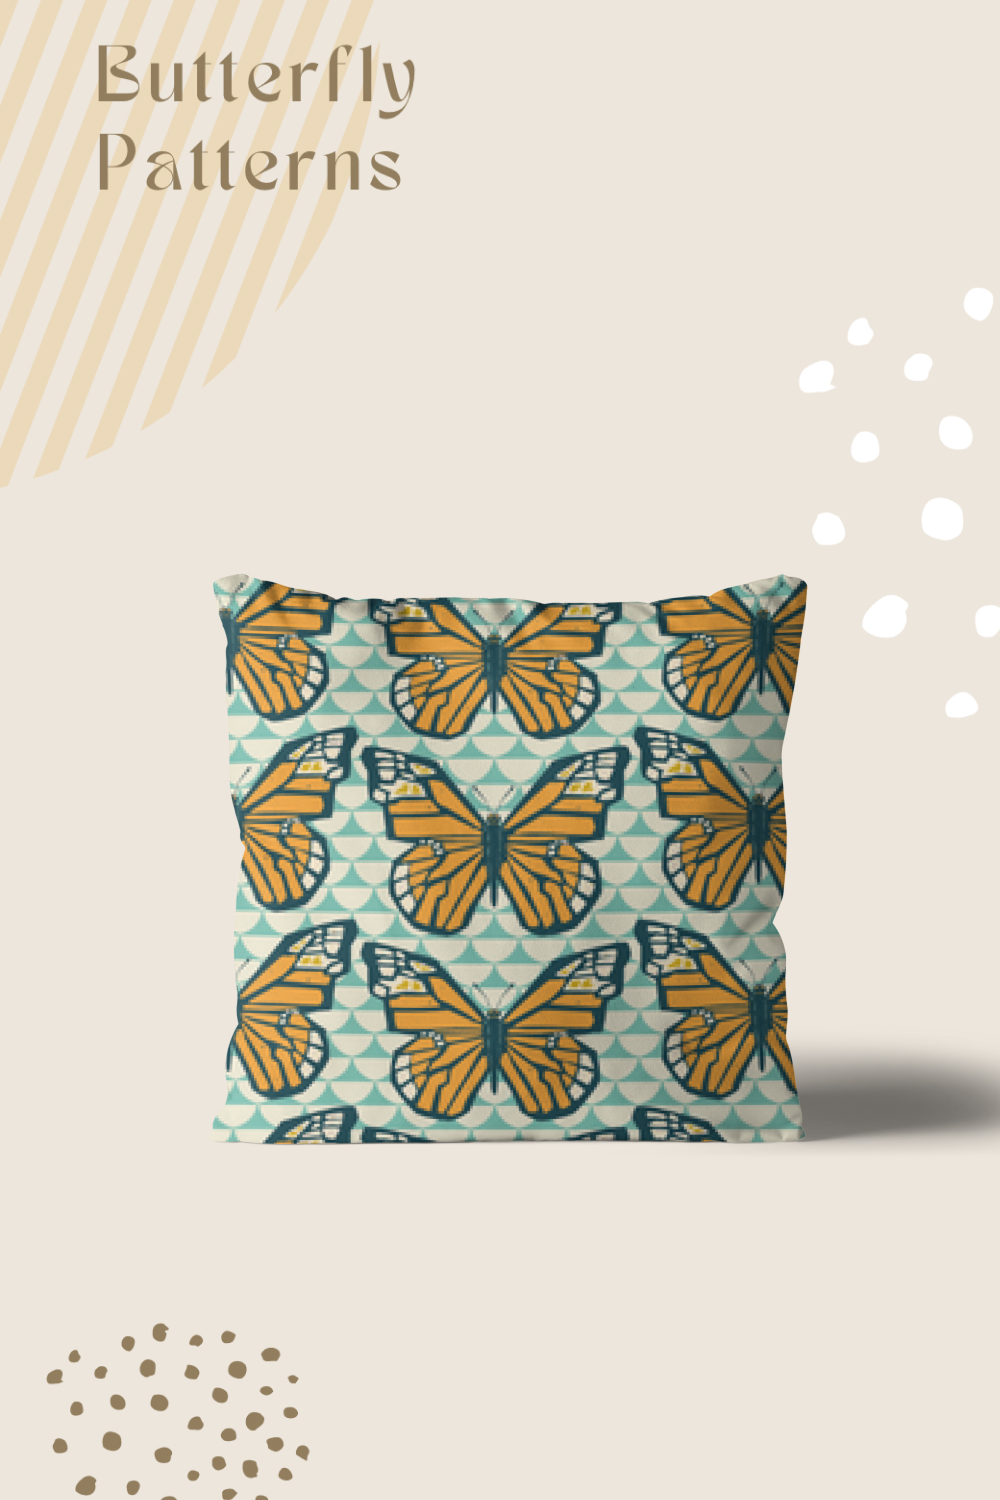 vintage seamless butterfly patterns 2 1 588